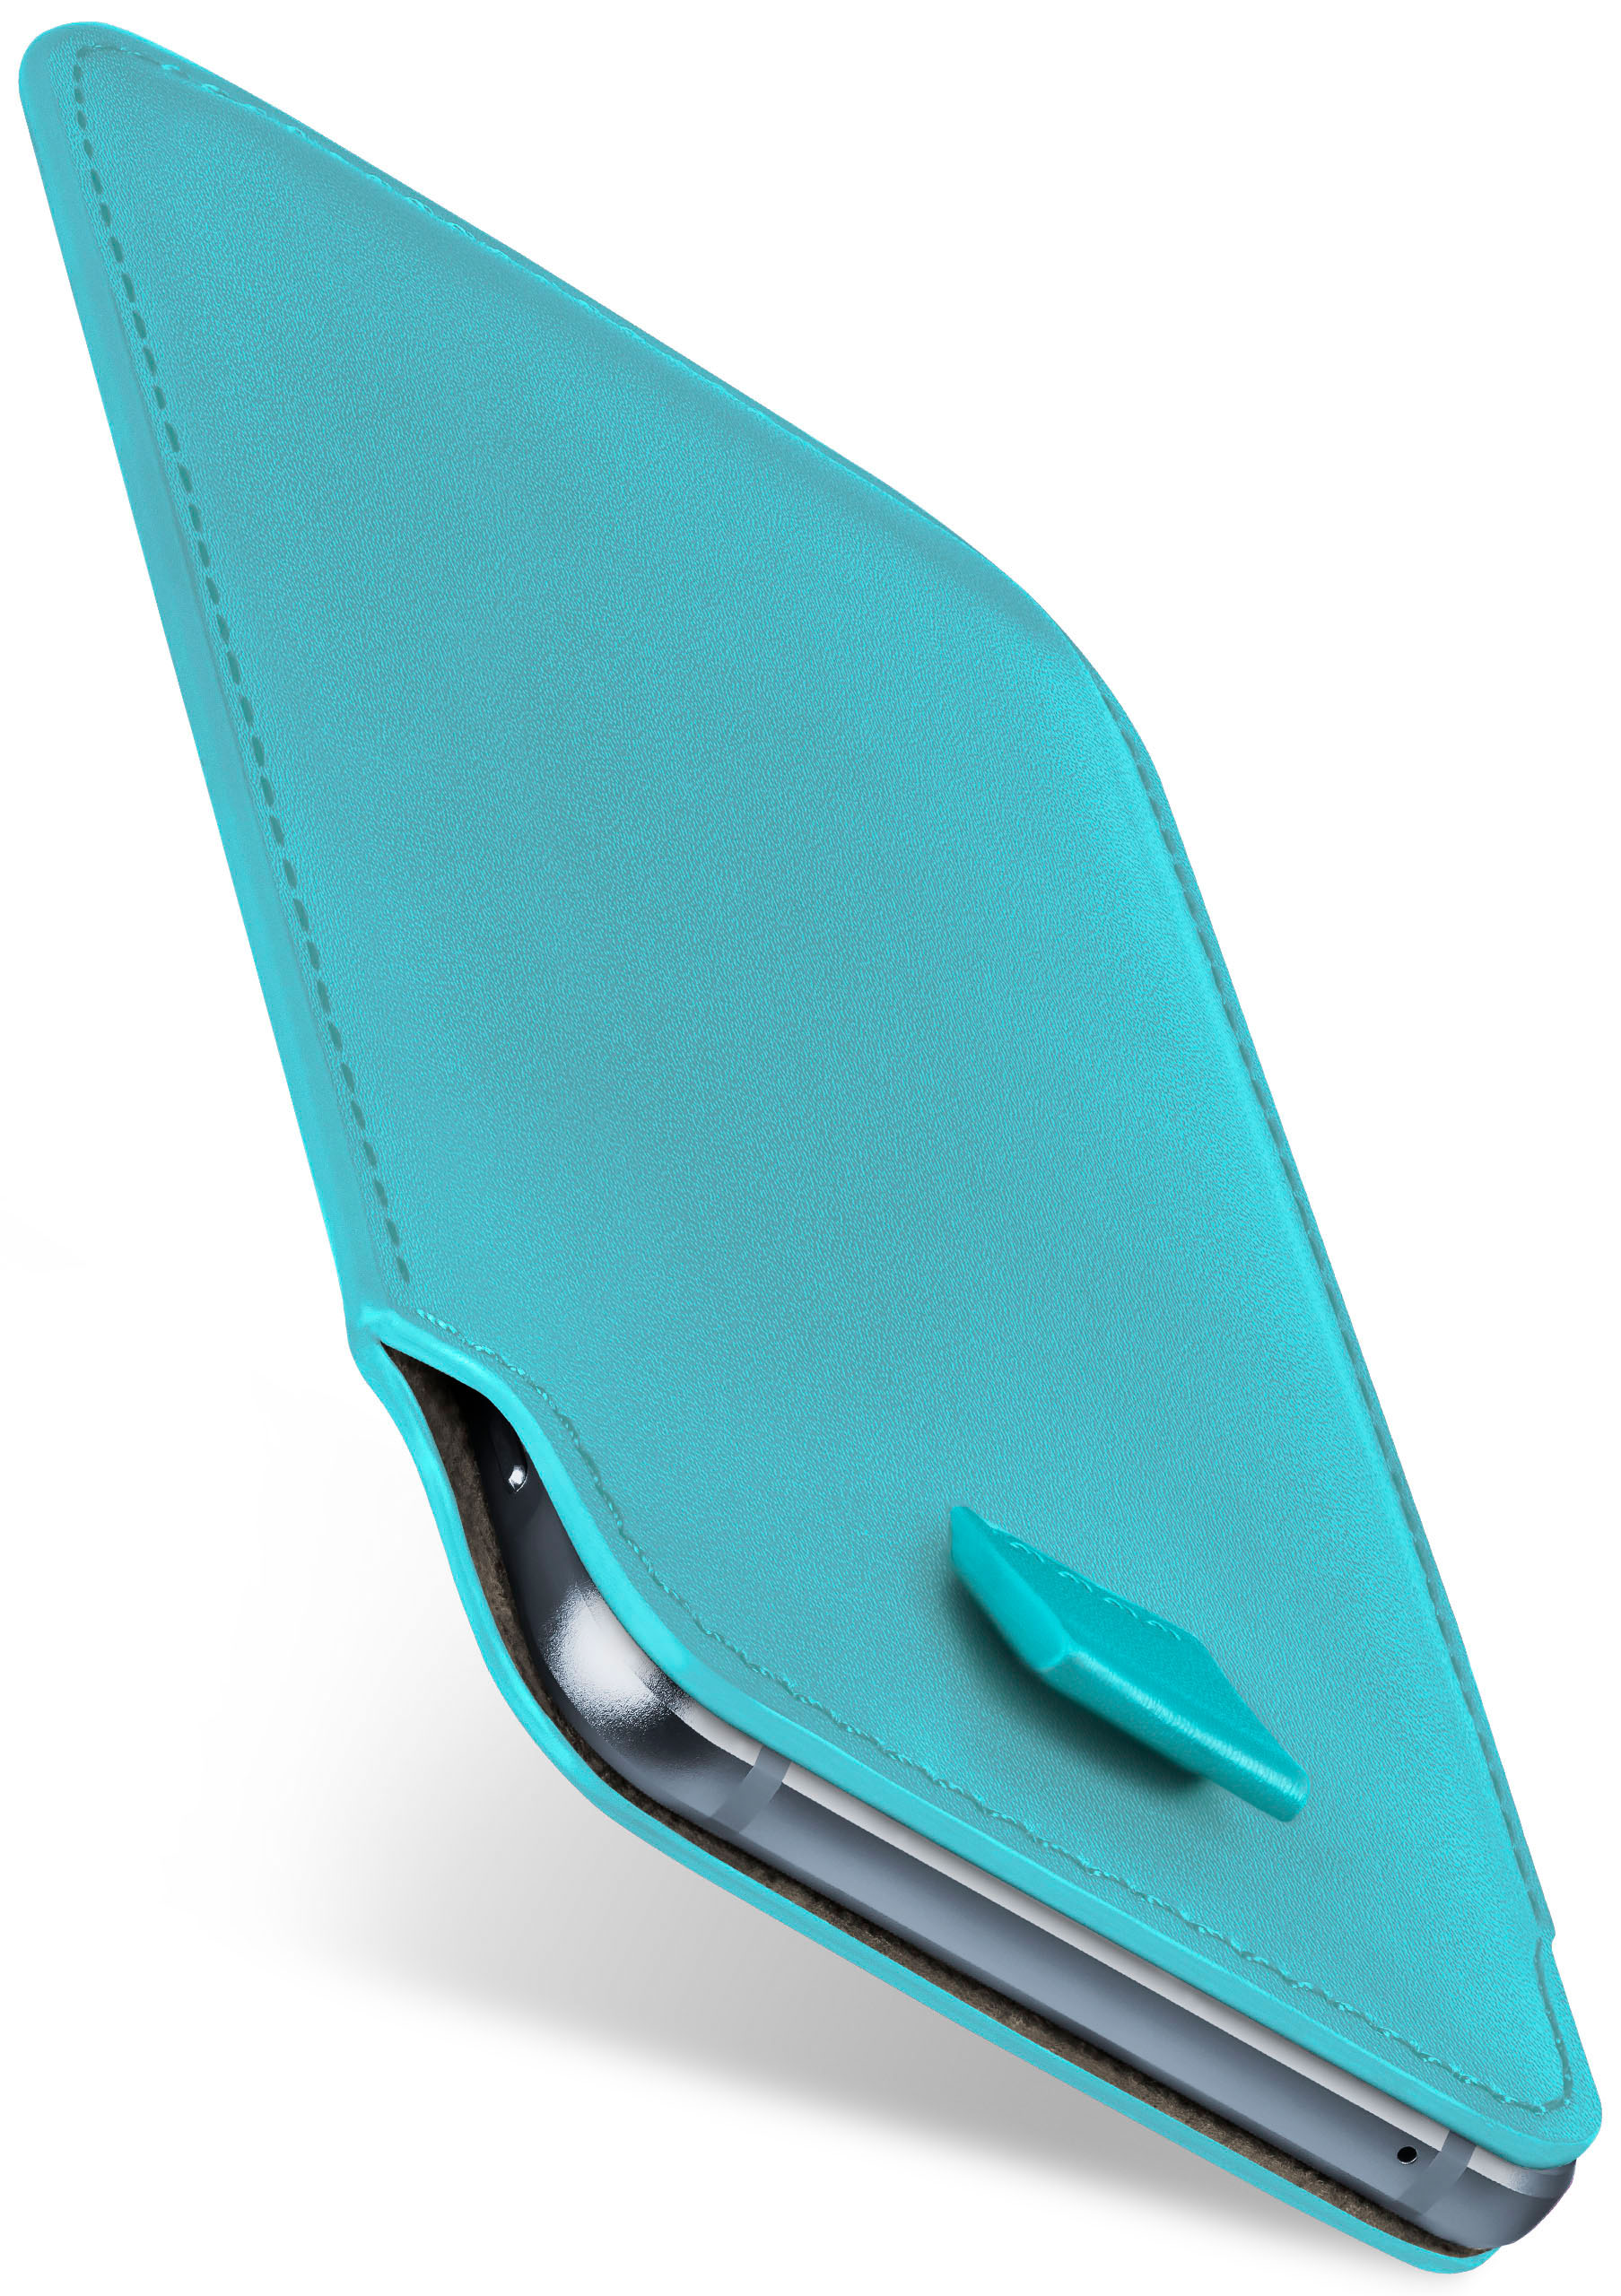 Case, Aqua-Cyan Full Slide Cover, Nokia, MOEX 216,